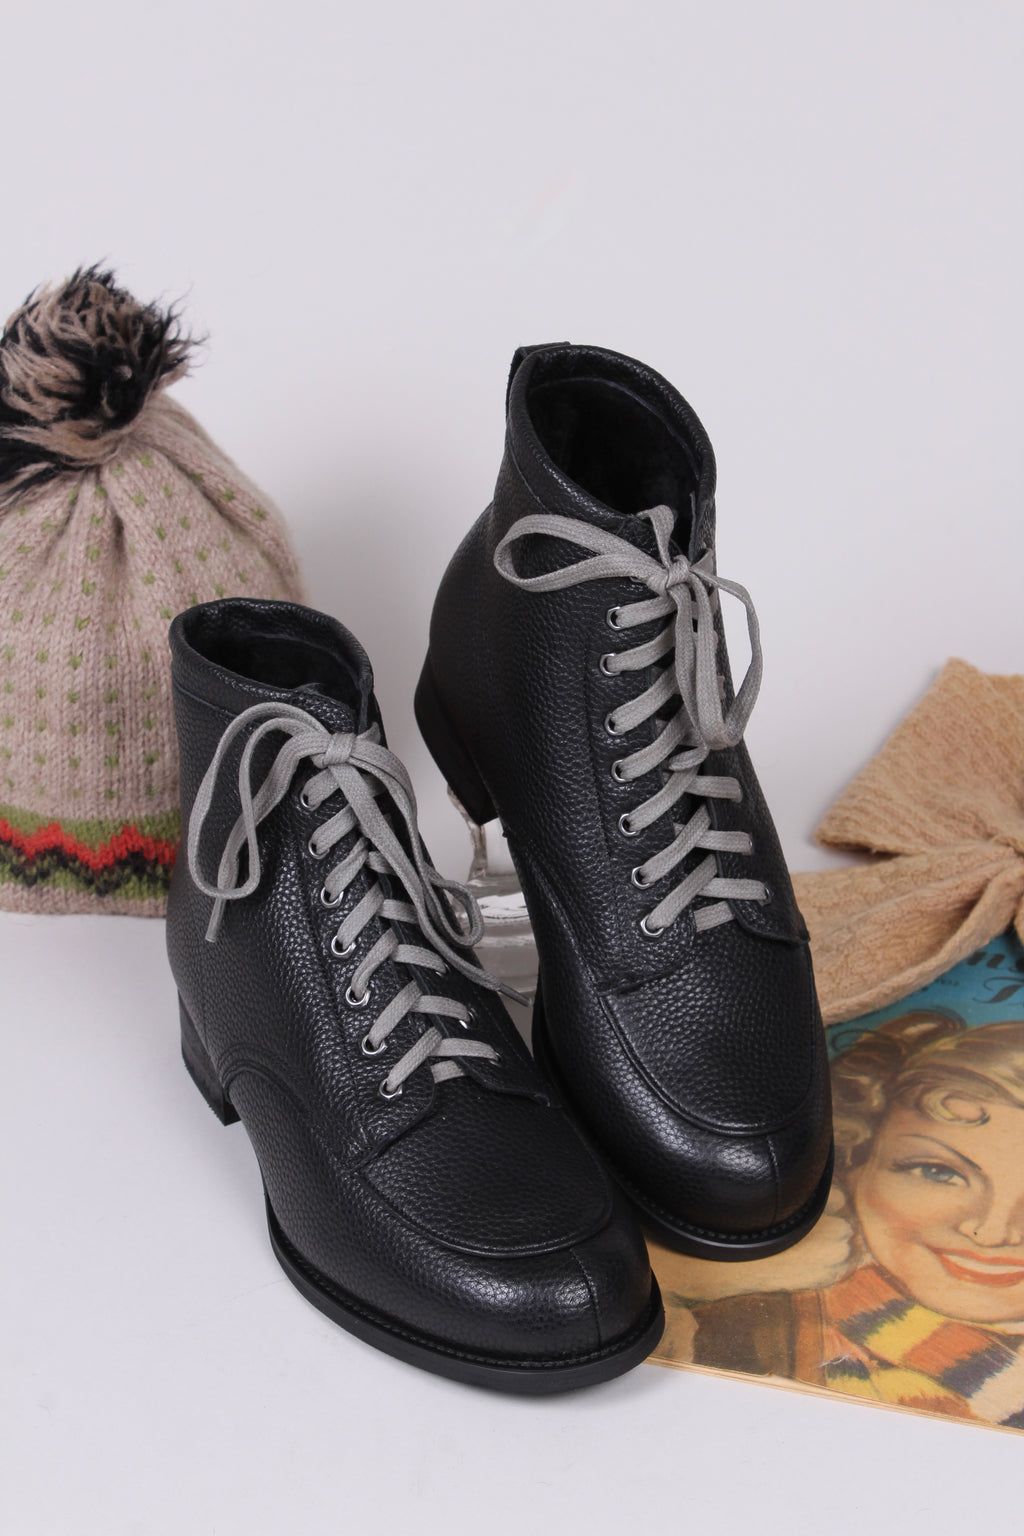 Retro Flat Shoes - 1930s, 1940s, 1950s, 1960s Styles